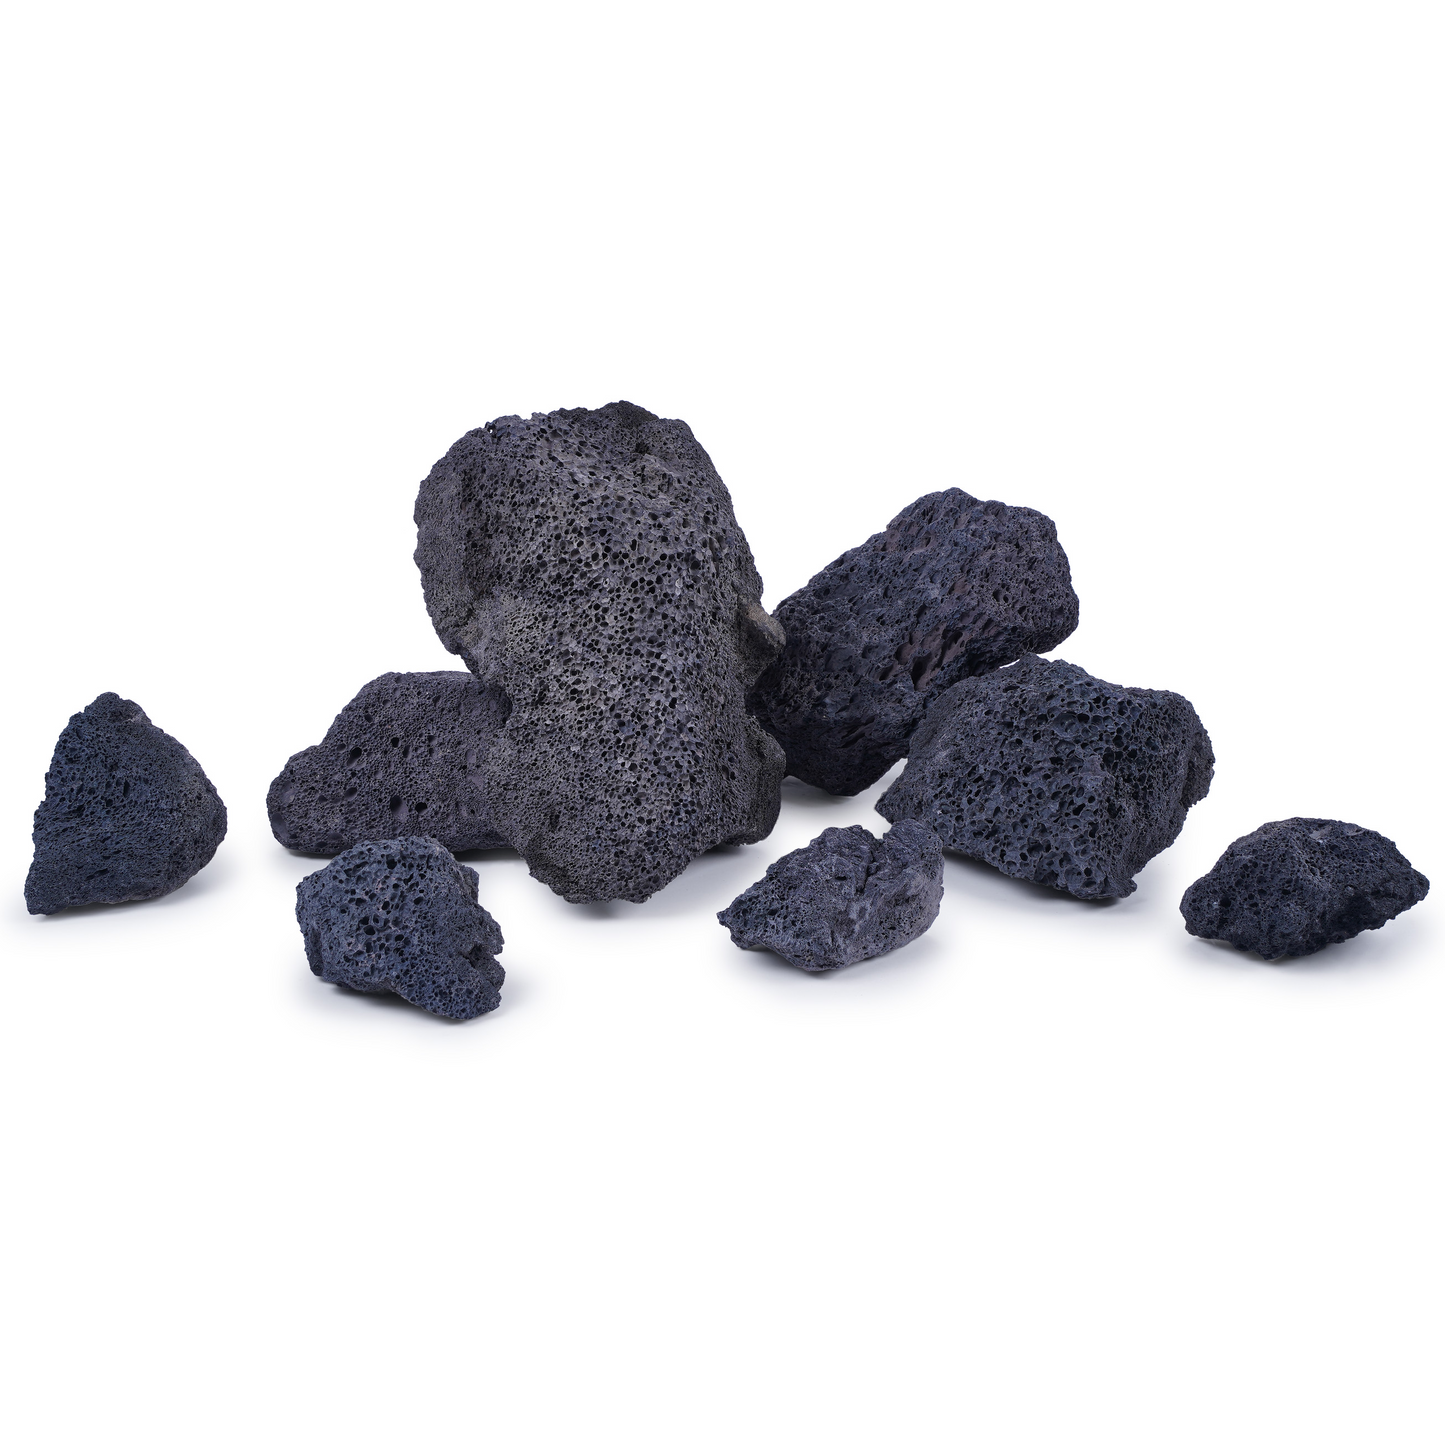 LANDEN Black Lava Stones for Aquascaping (16lbs,3-10 inches)11pcs